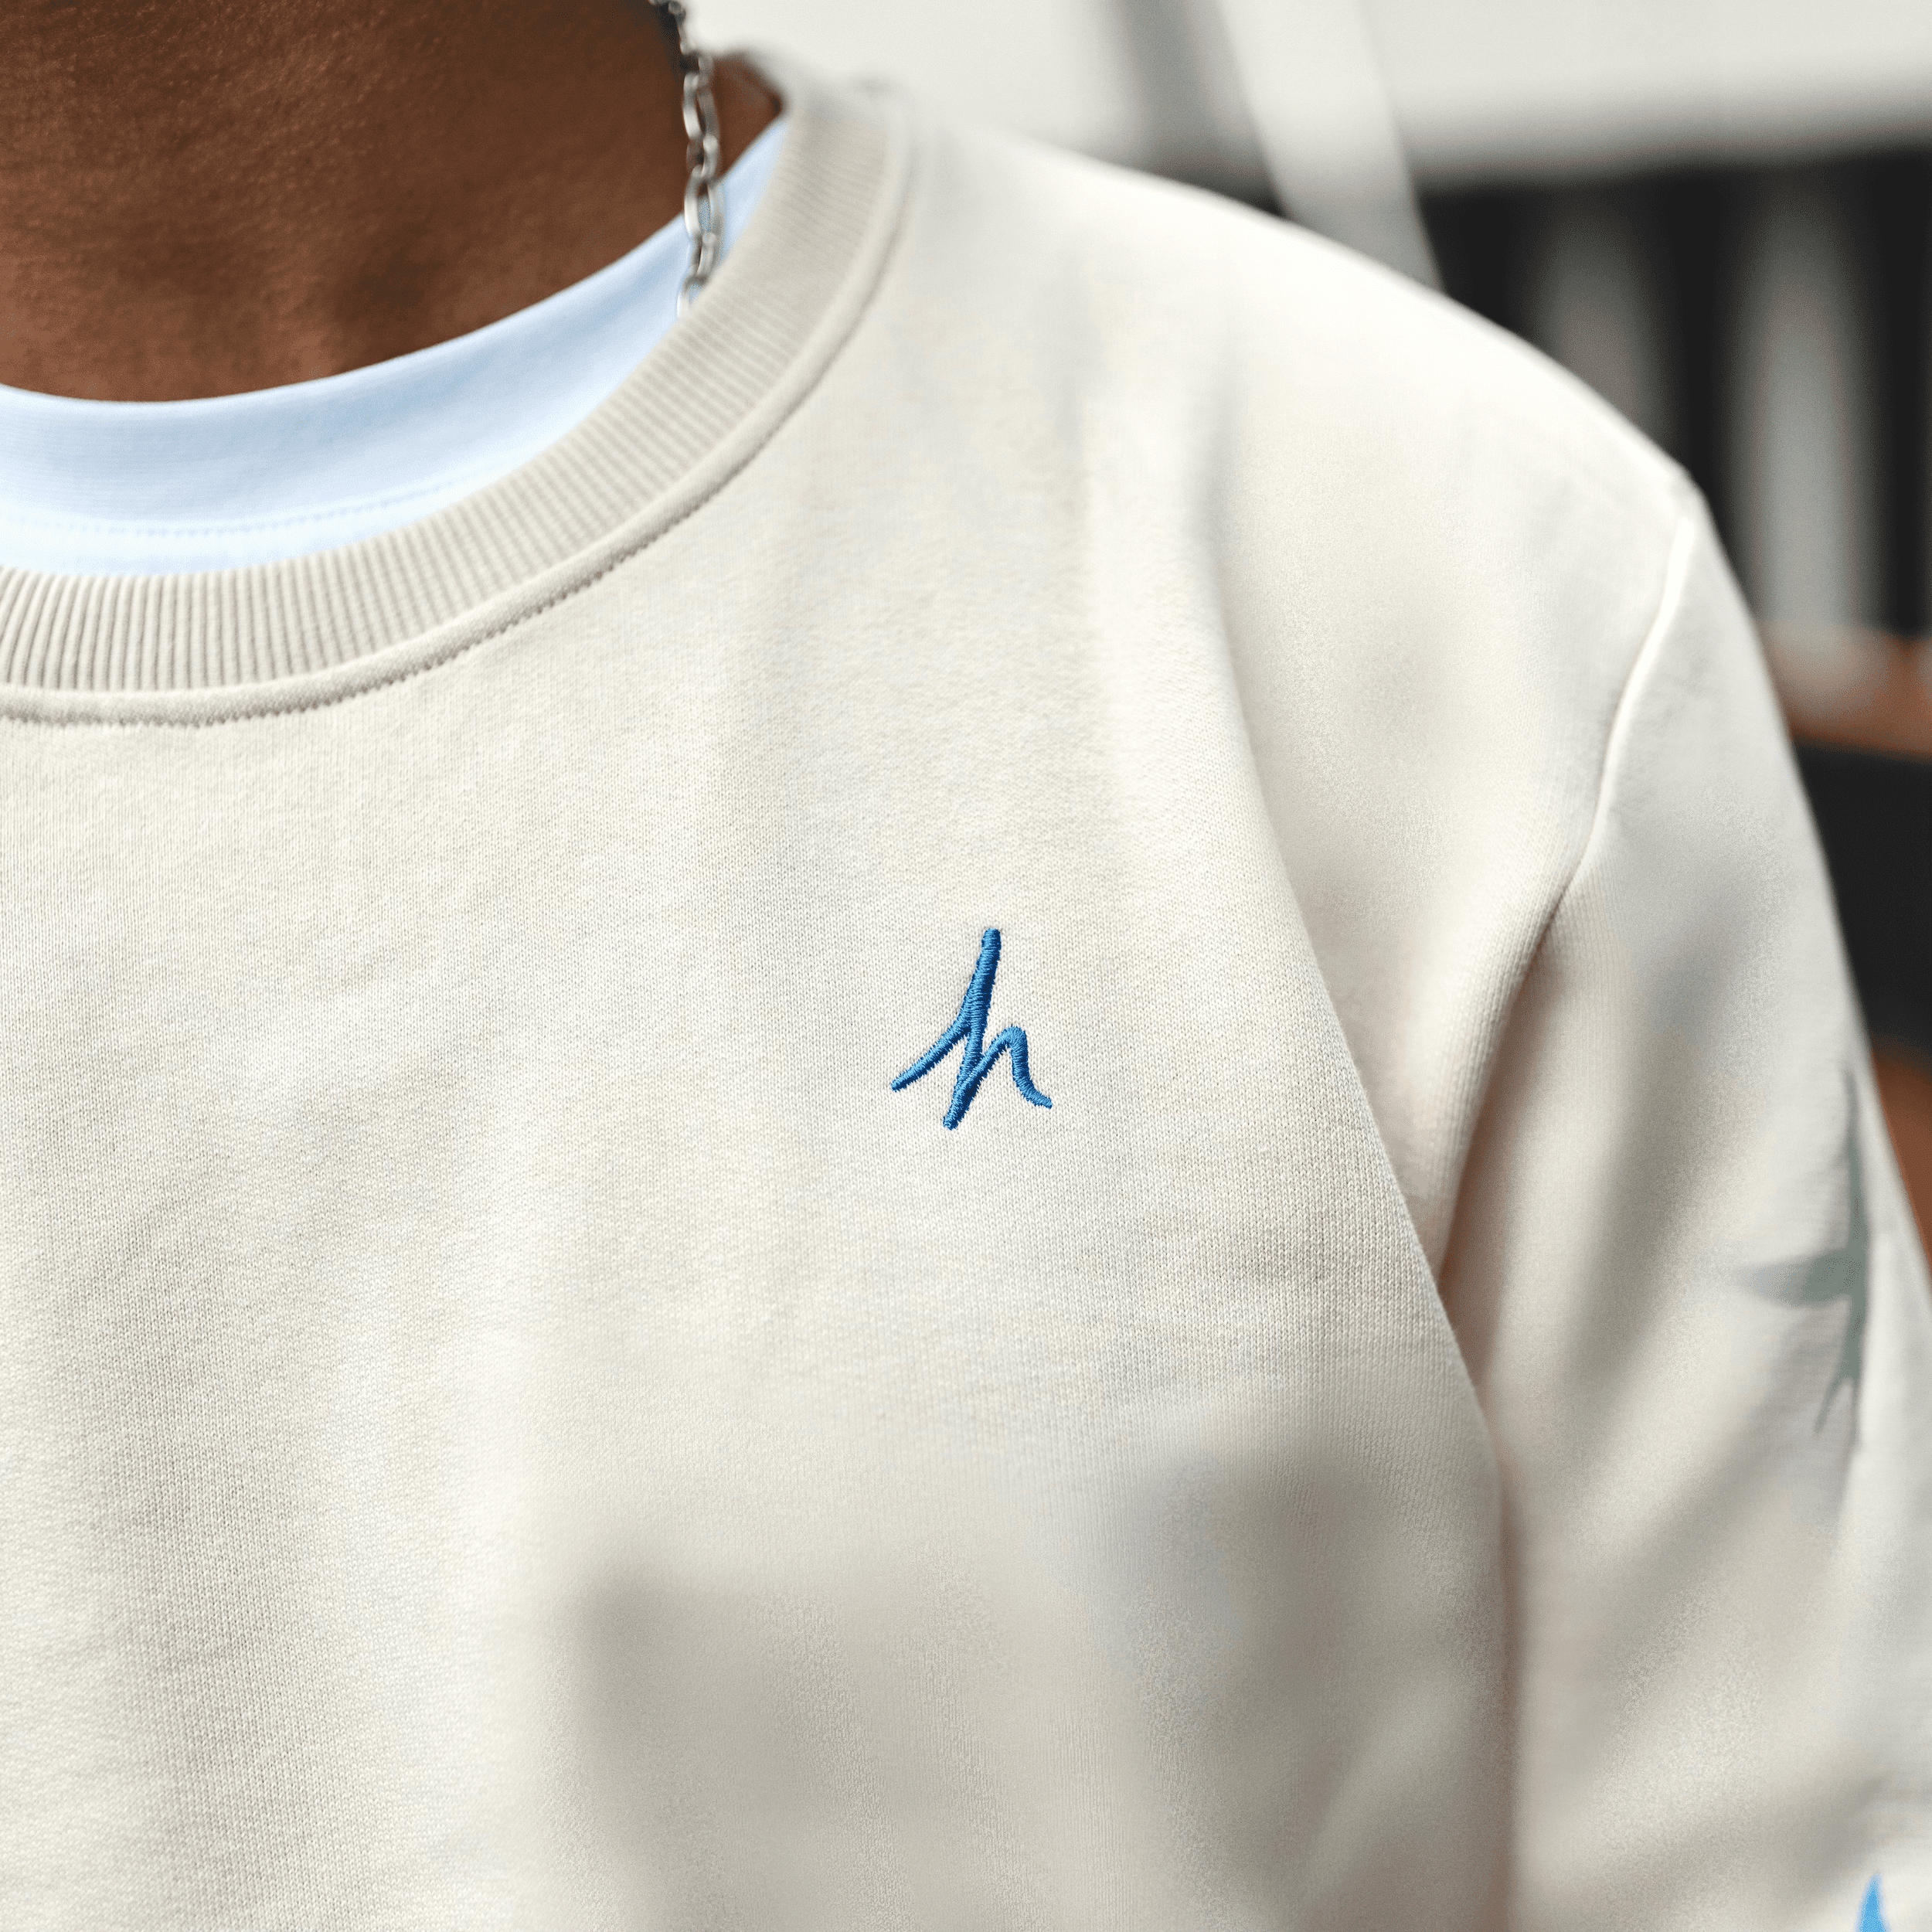 h clothing - close up of off-white cream sweatshirt with blue h logo